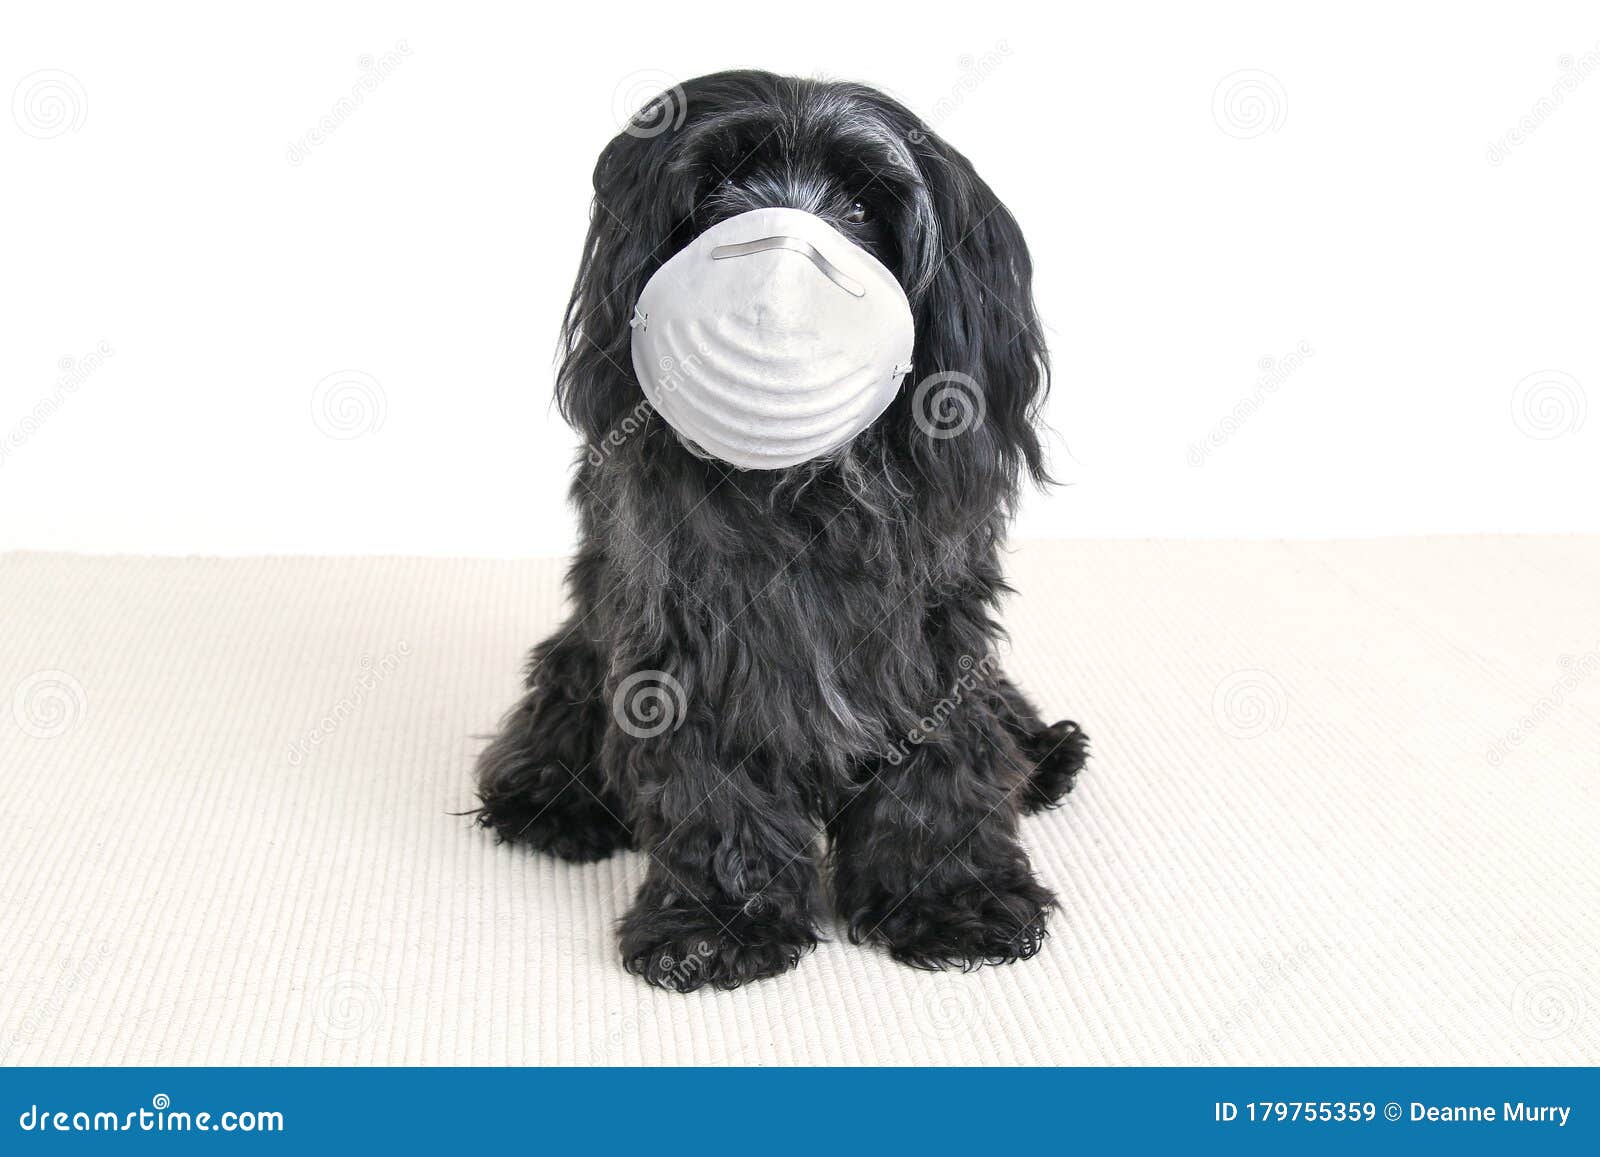 small dog wears a mask covid 19 corona virus